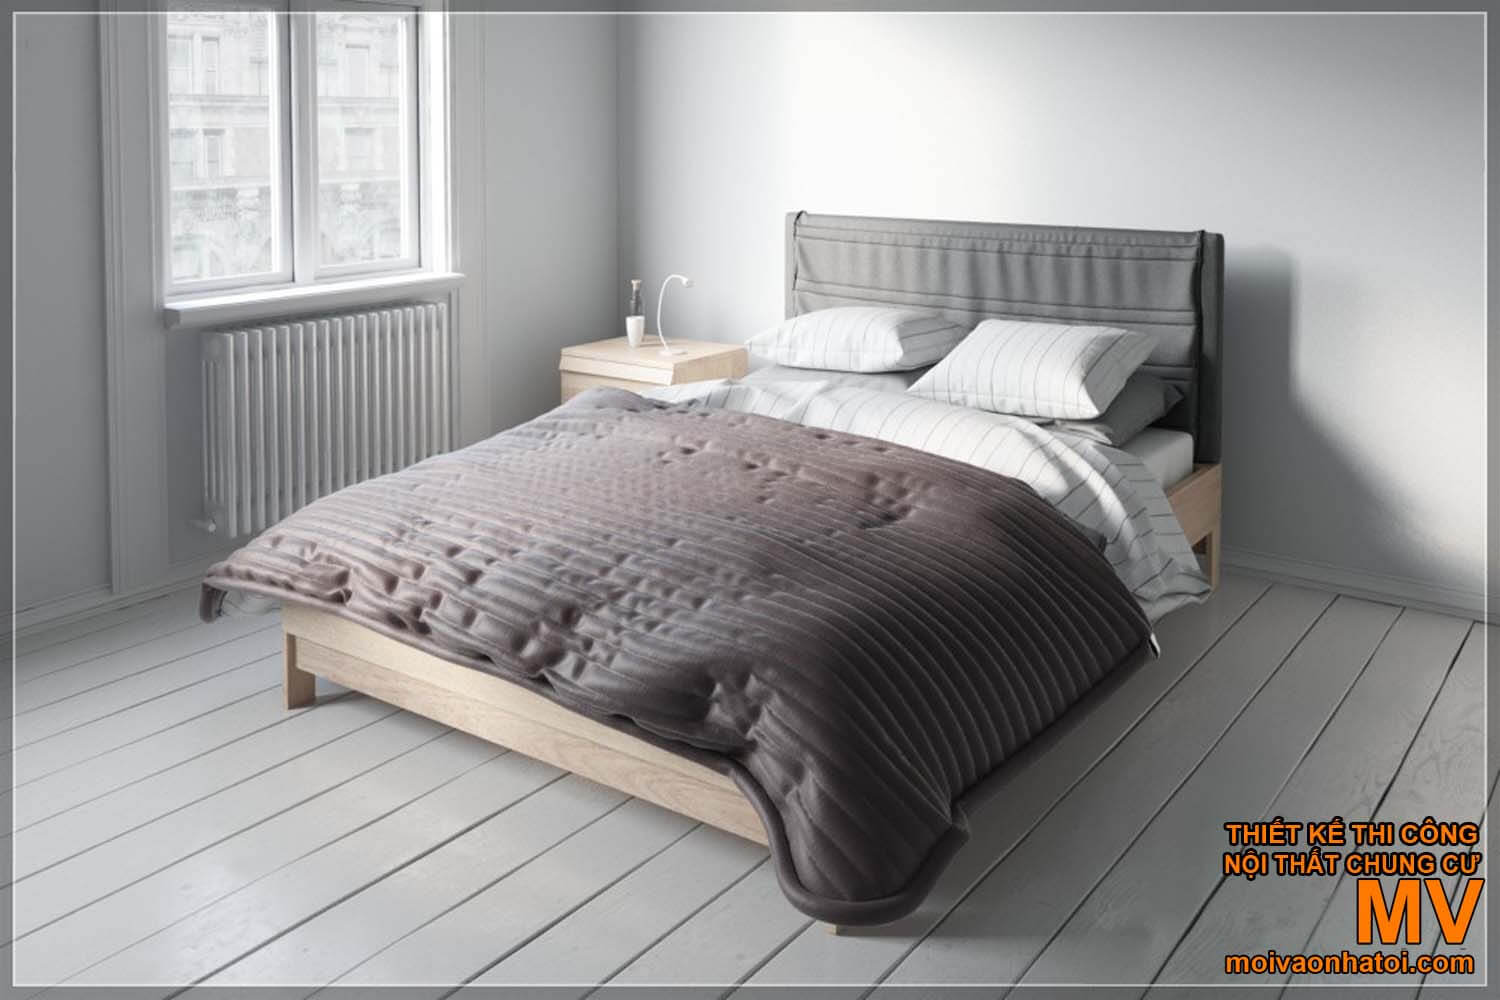 Decorative scandinavian bedding